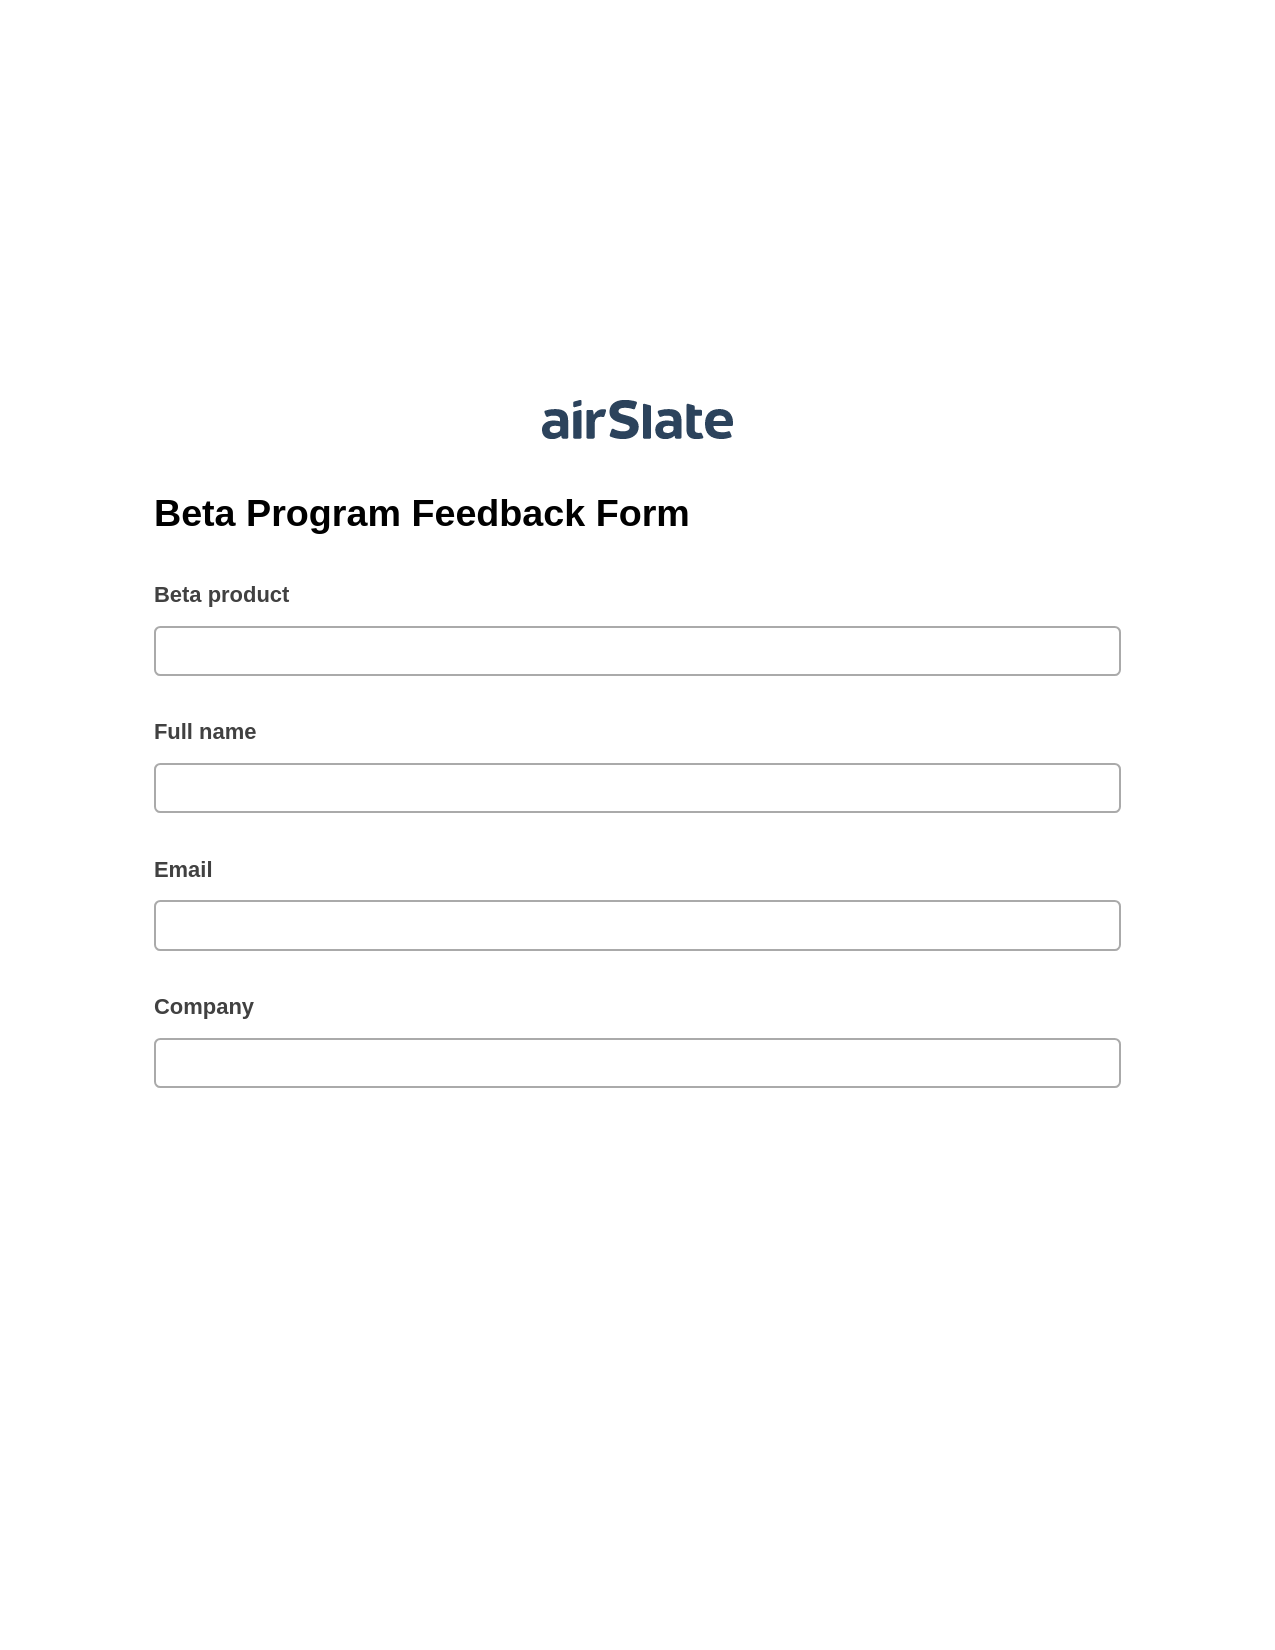 Multirole Beta Program Feedback Form Pre-fill from NetSuite Records Bot, Set Signature Type Bot, Google Drive Bot